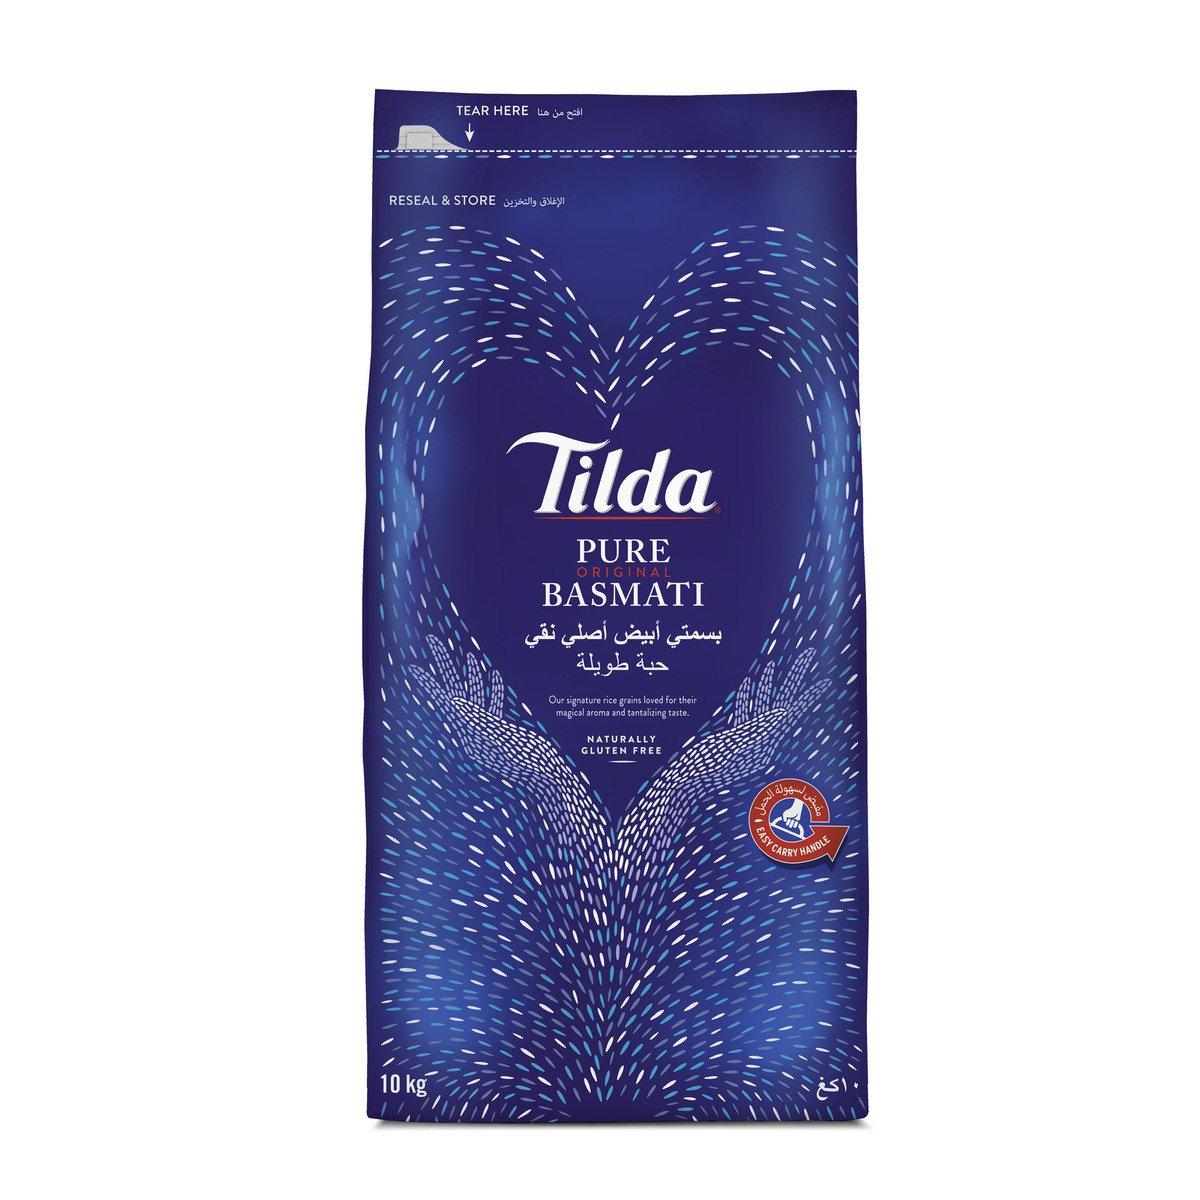 Tilda Pure Original Basmati Rice 10 kg